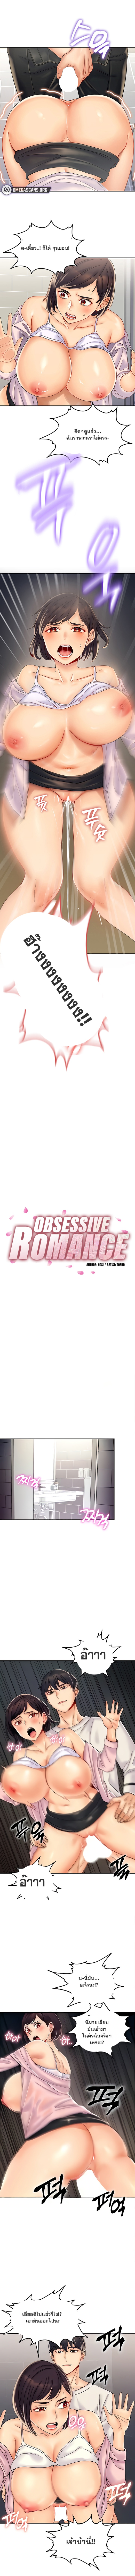 Obsessive Romance 7 (1)